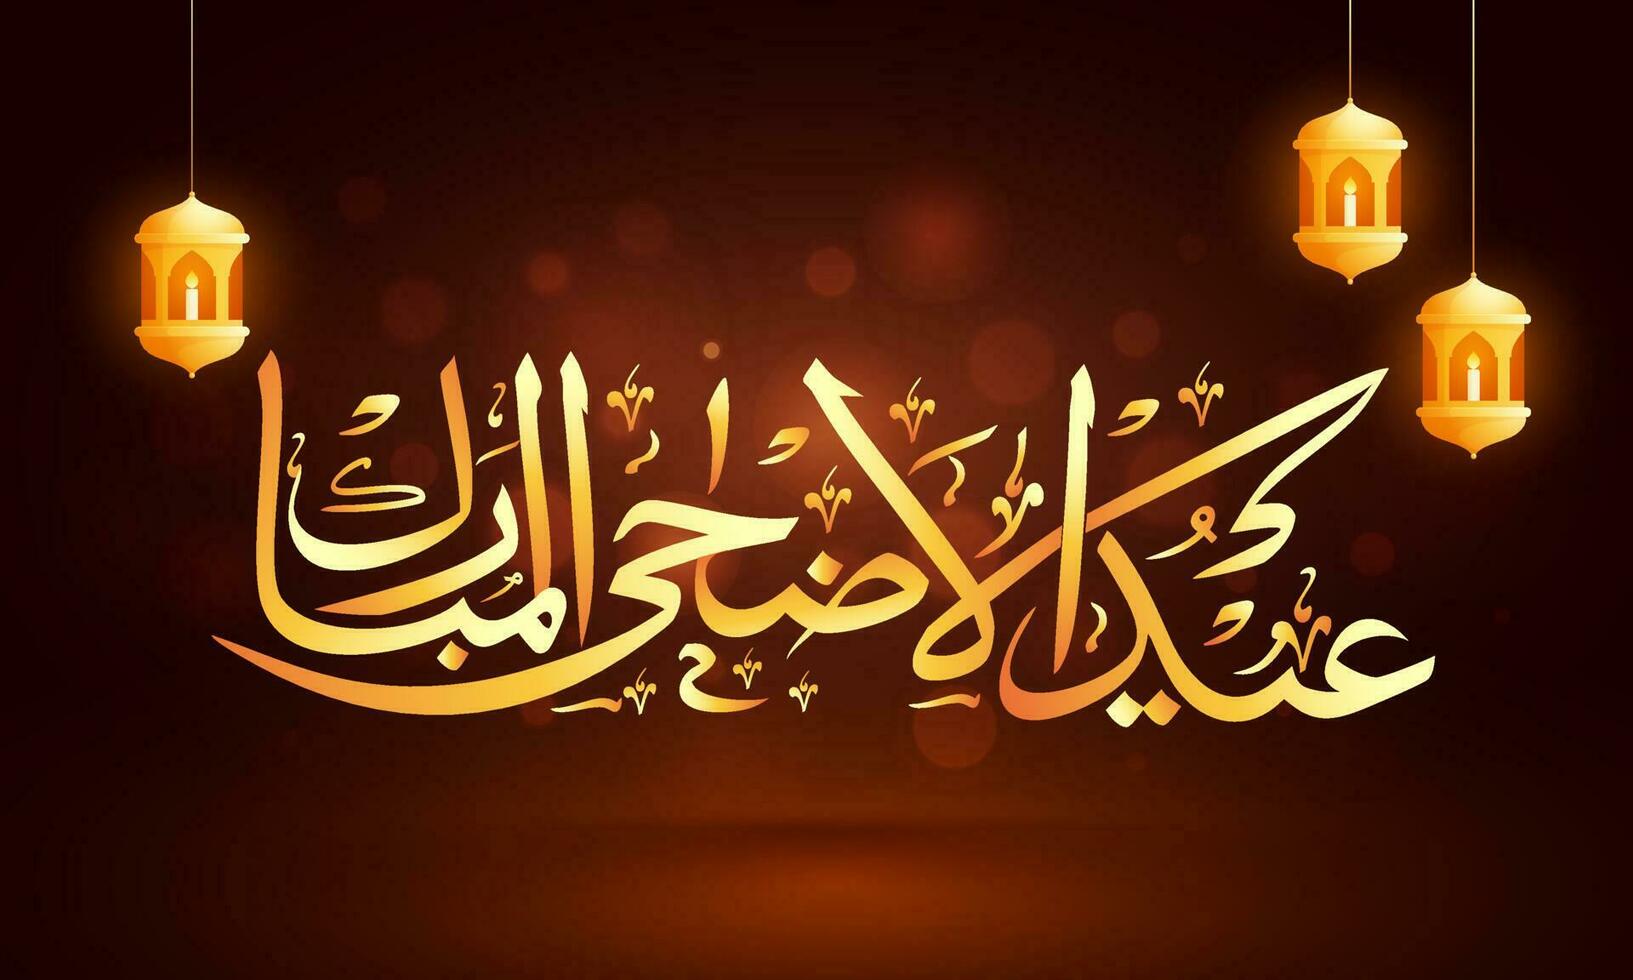 dorado eid-ul-adha caligrafía en Arábica idioma con colgando iluminado linternas decorado en marrón bokeh difuminar antecedentes. vector